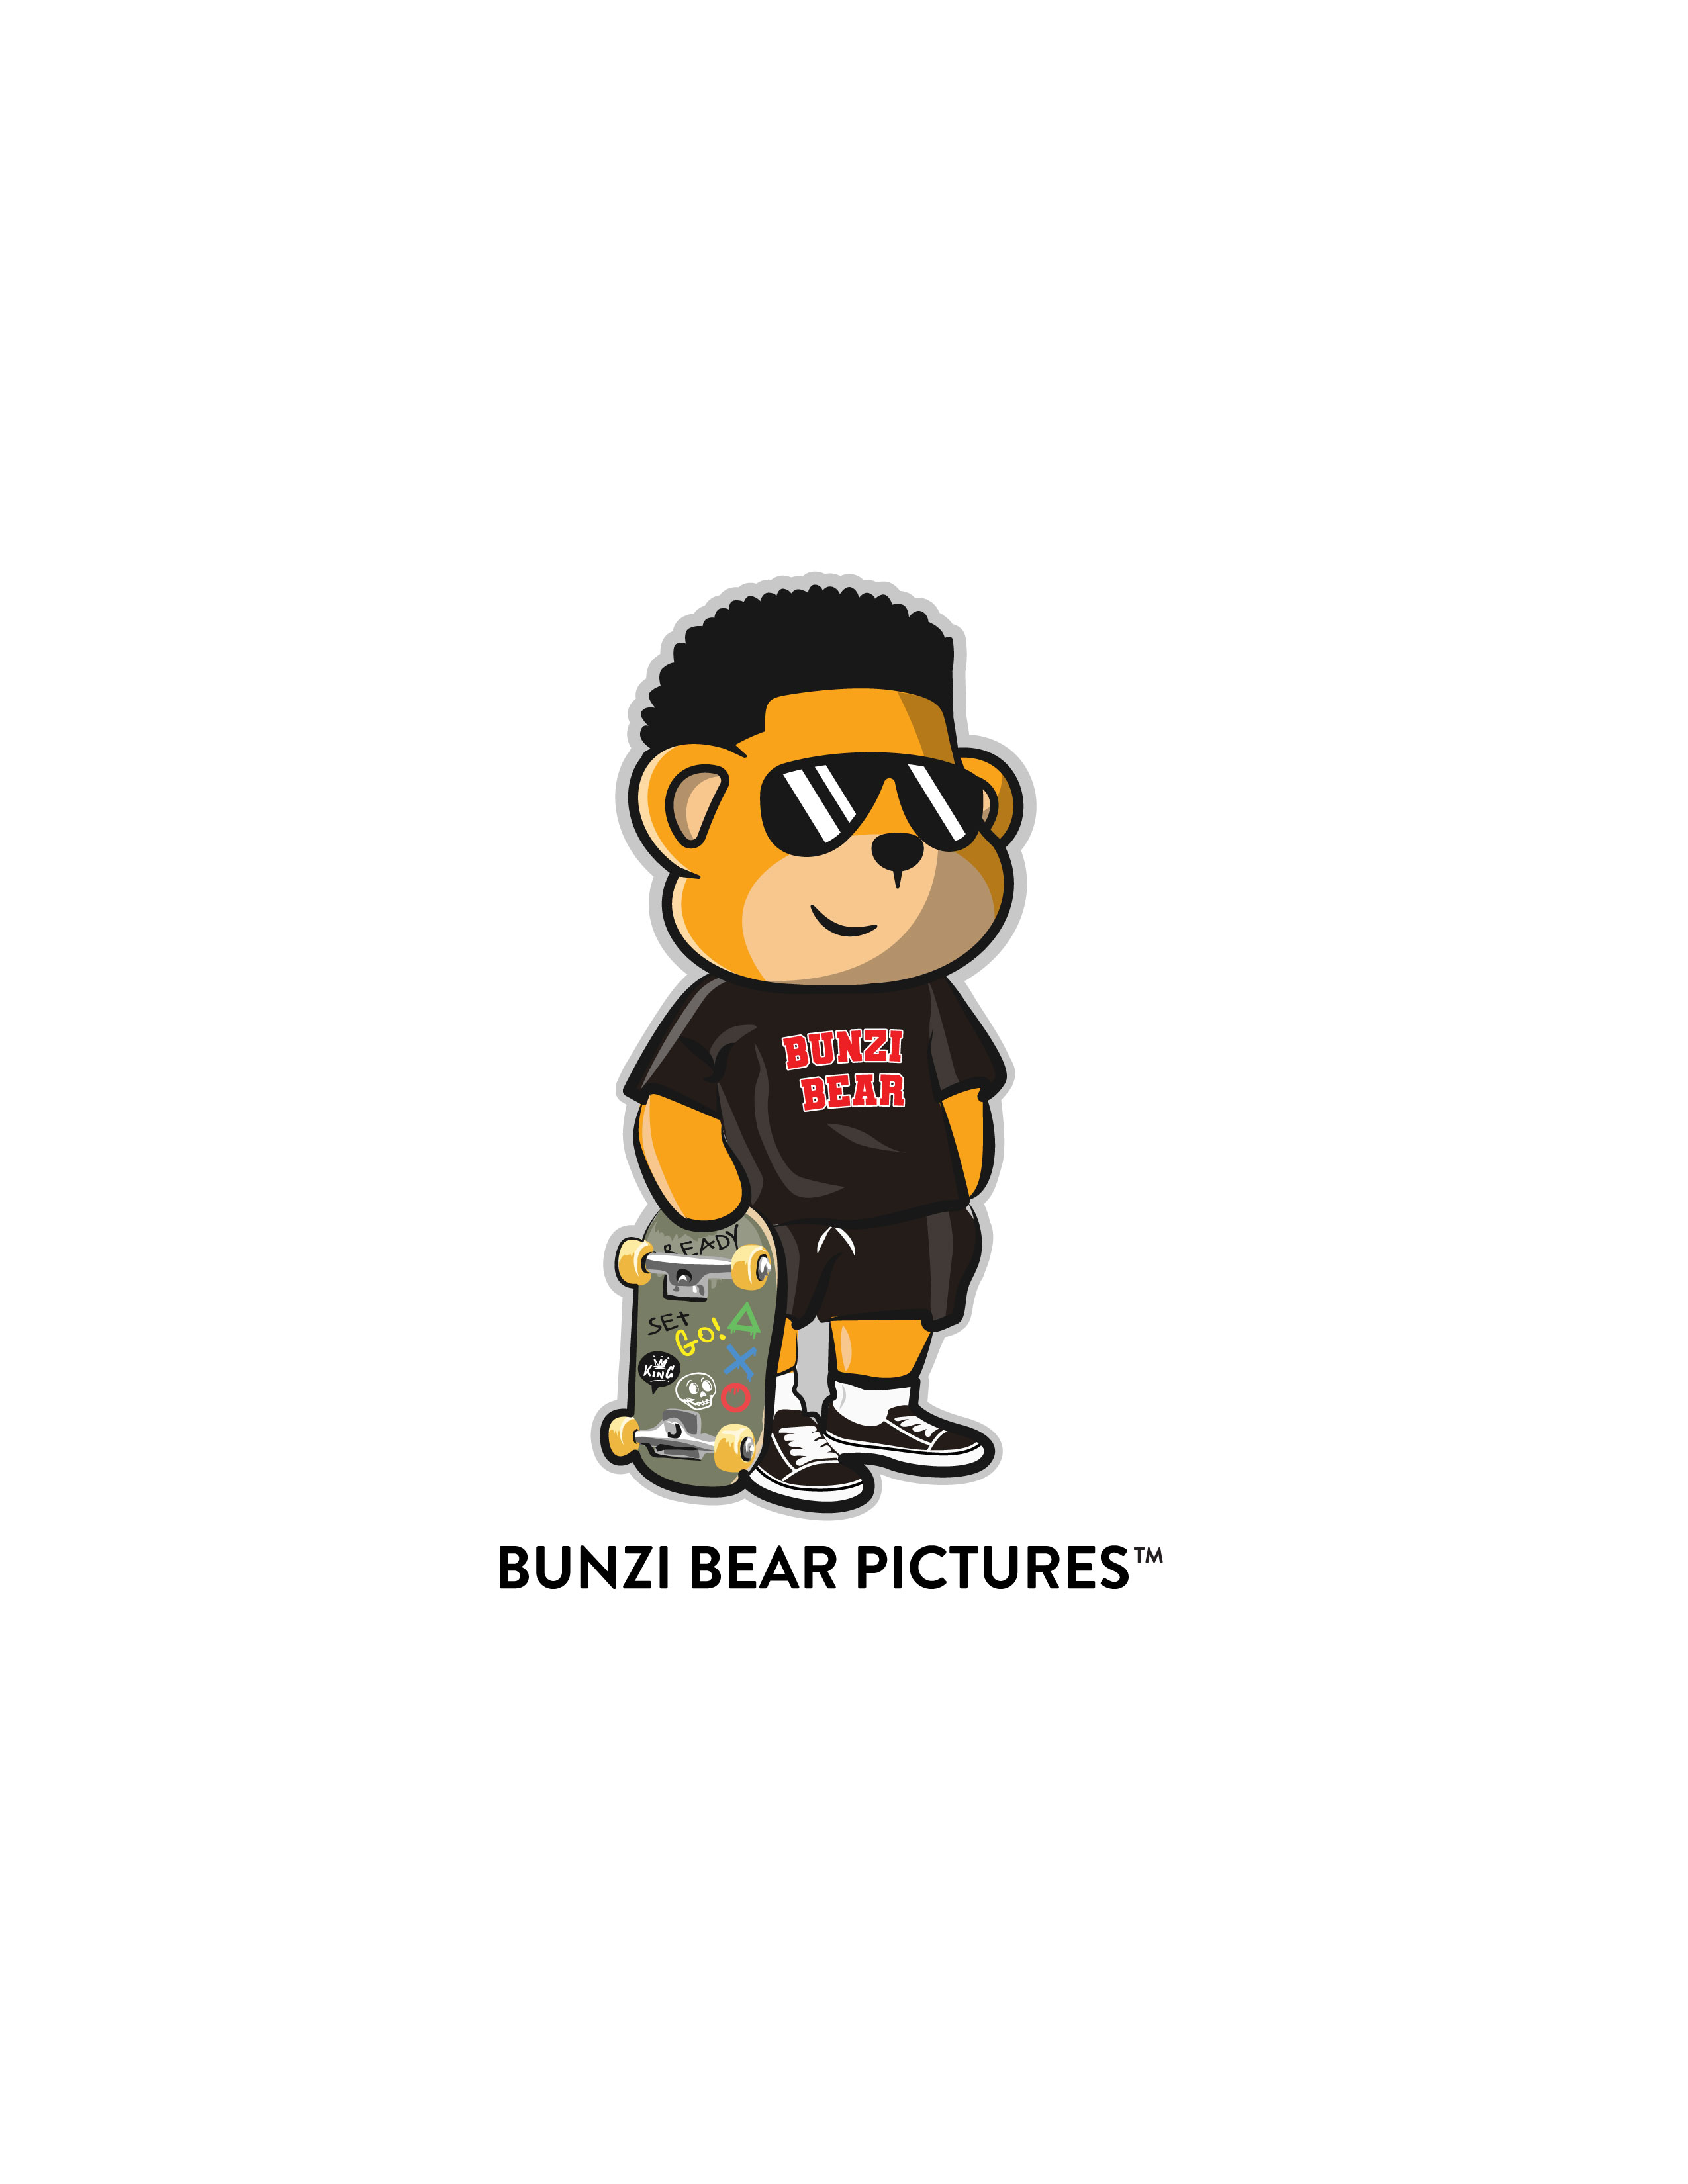 Bunzi Bear Pictures